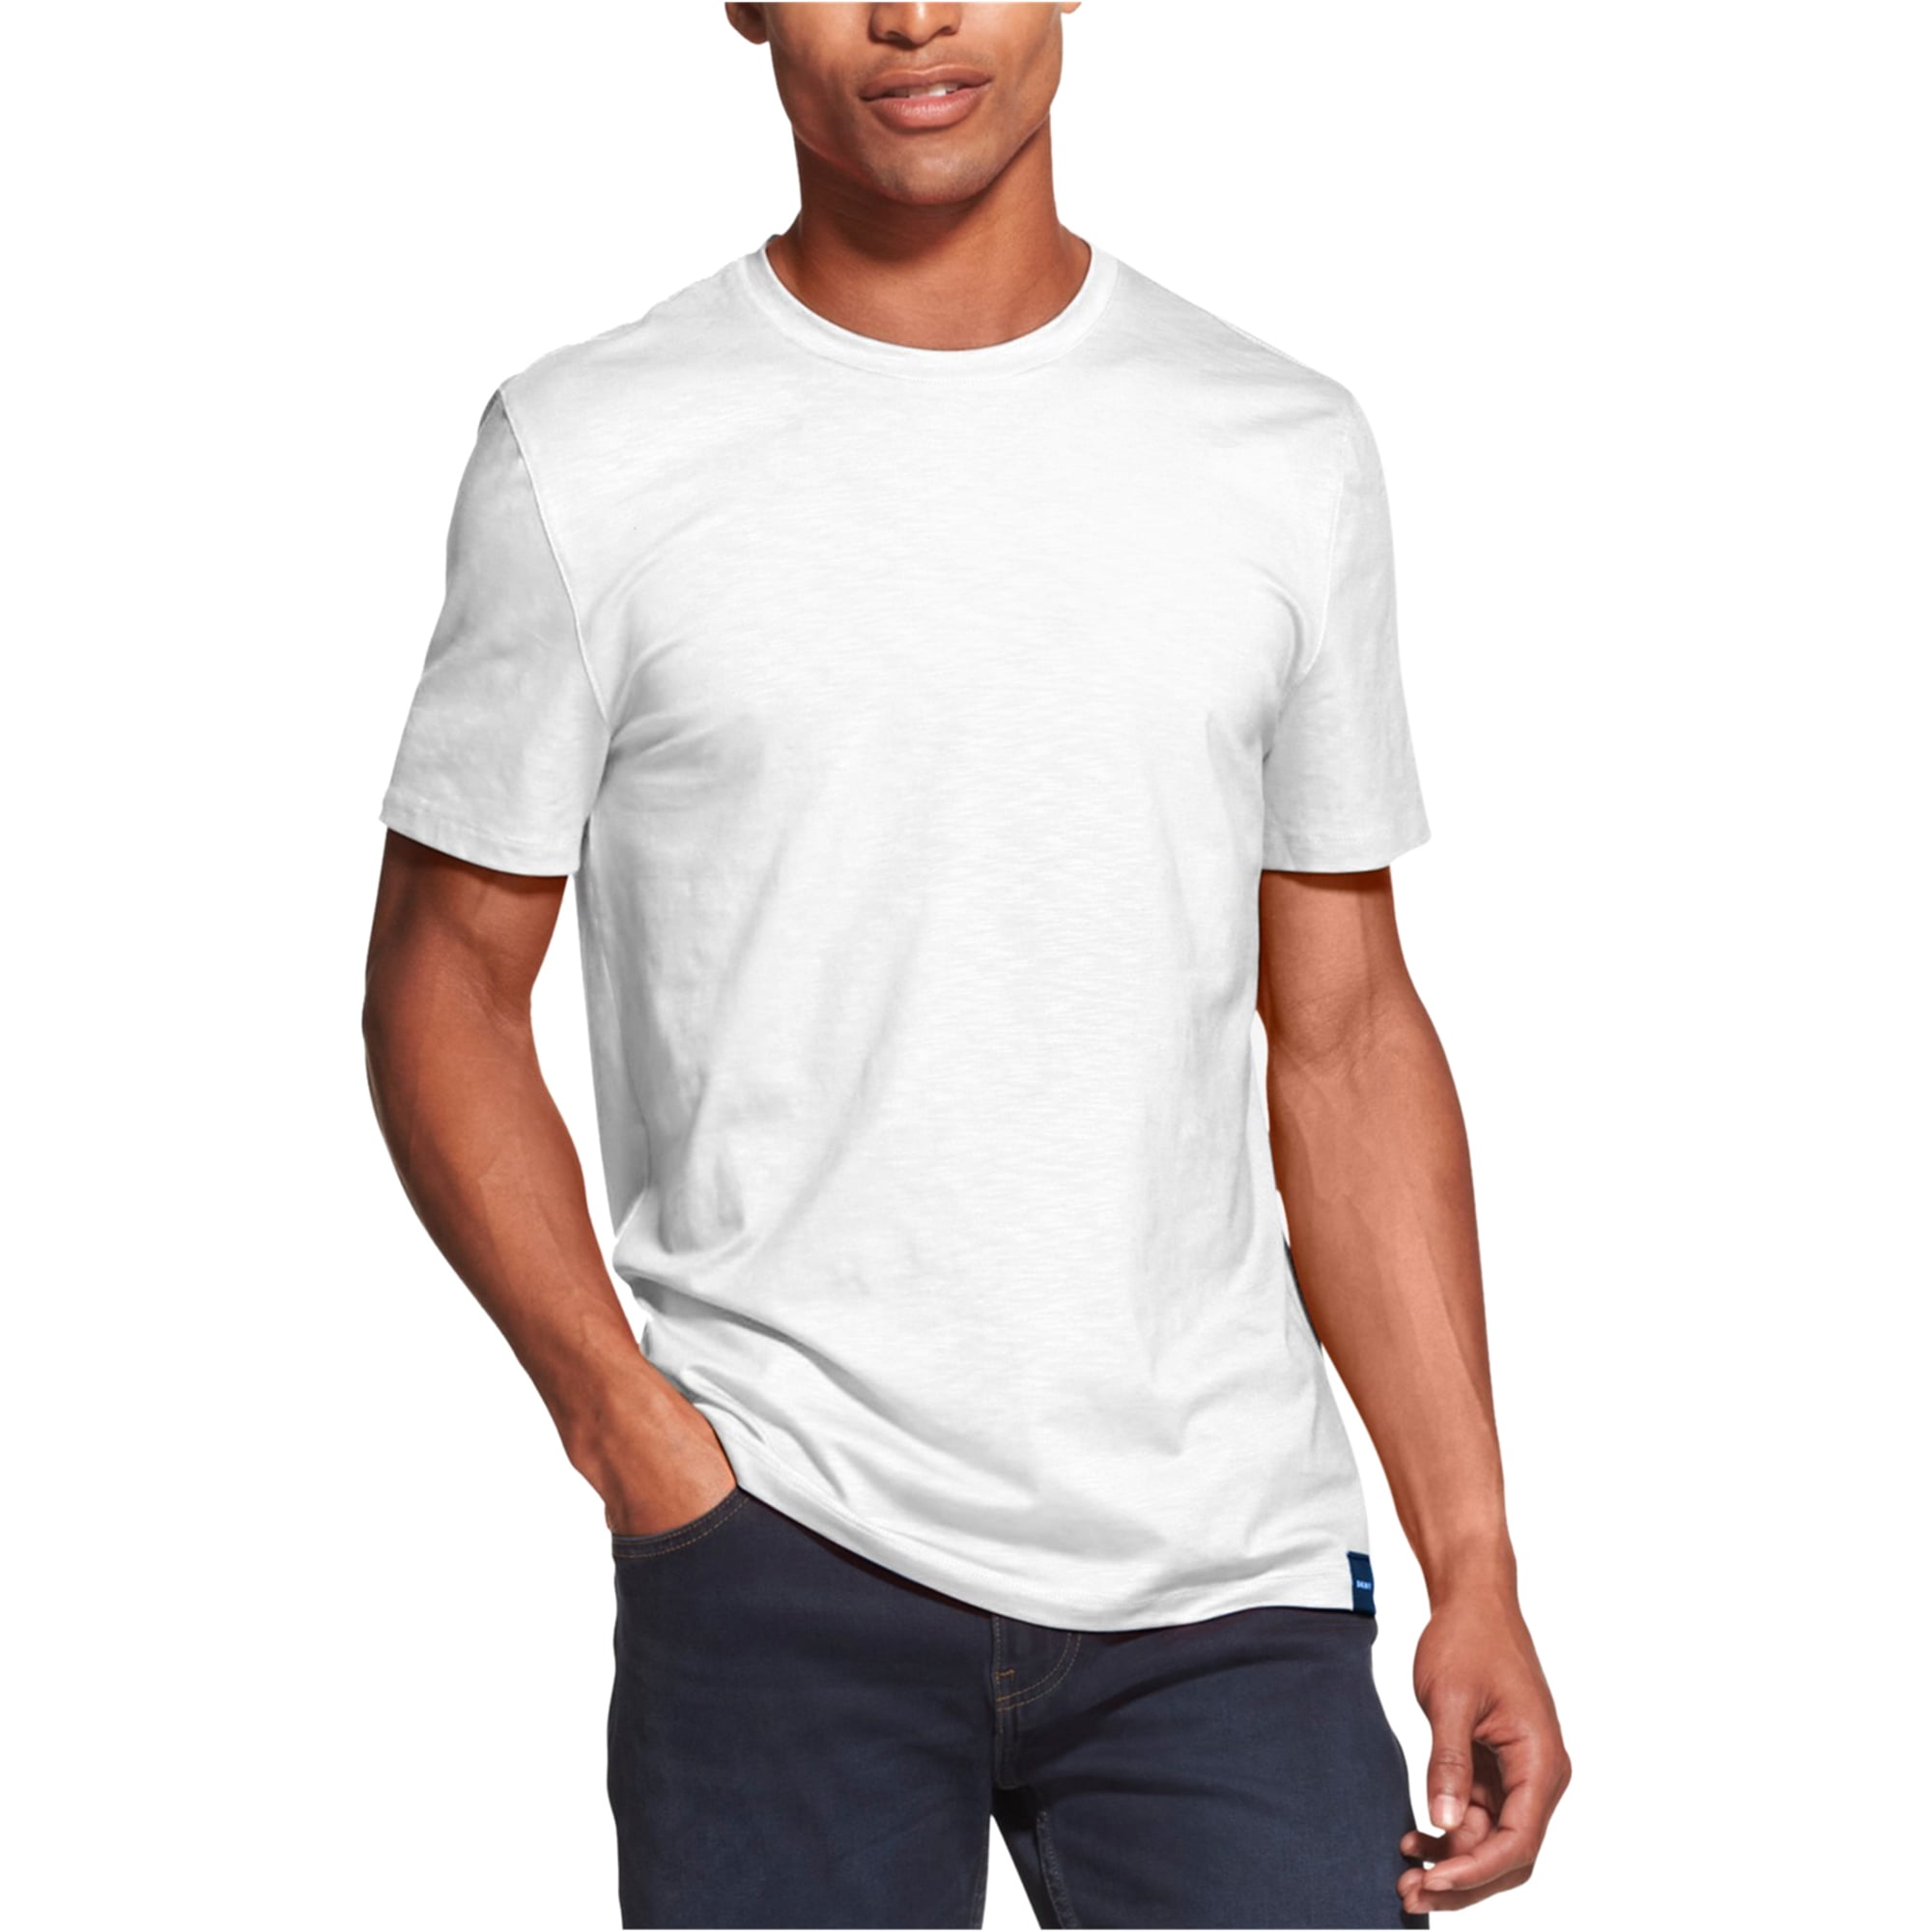 Dkny Mens Mercerized Solid Basic T-Shirt - Walmart.com